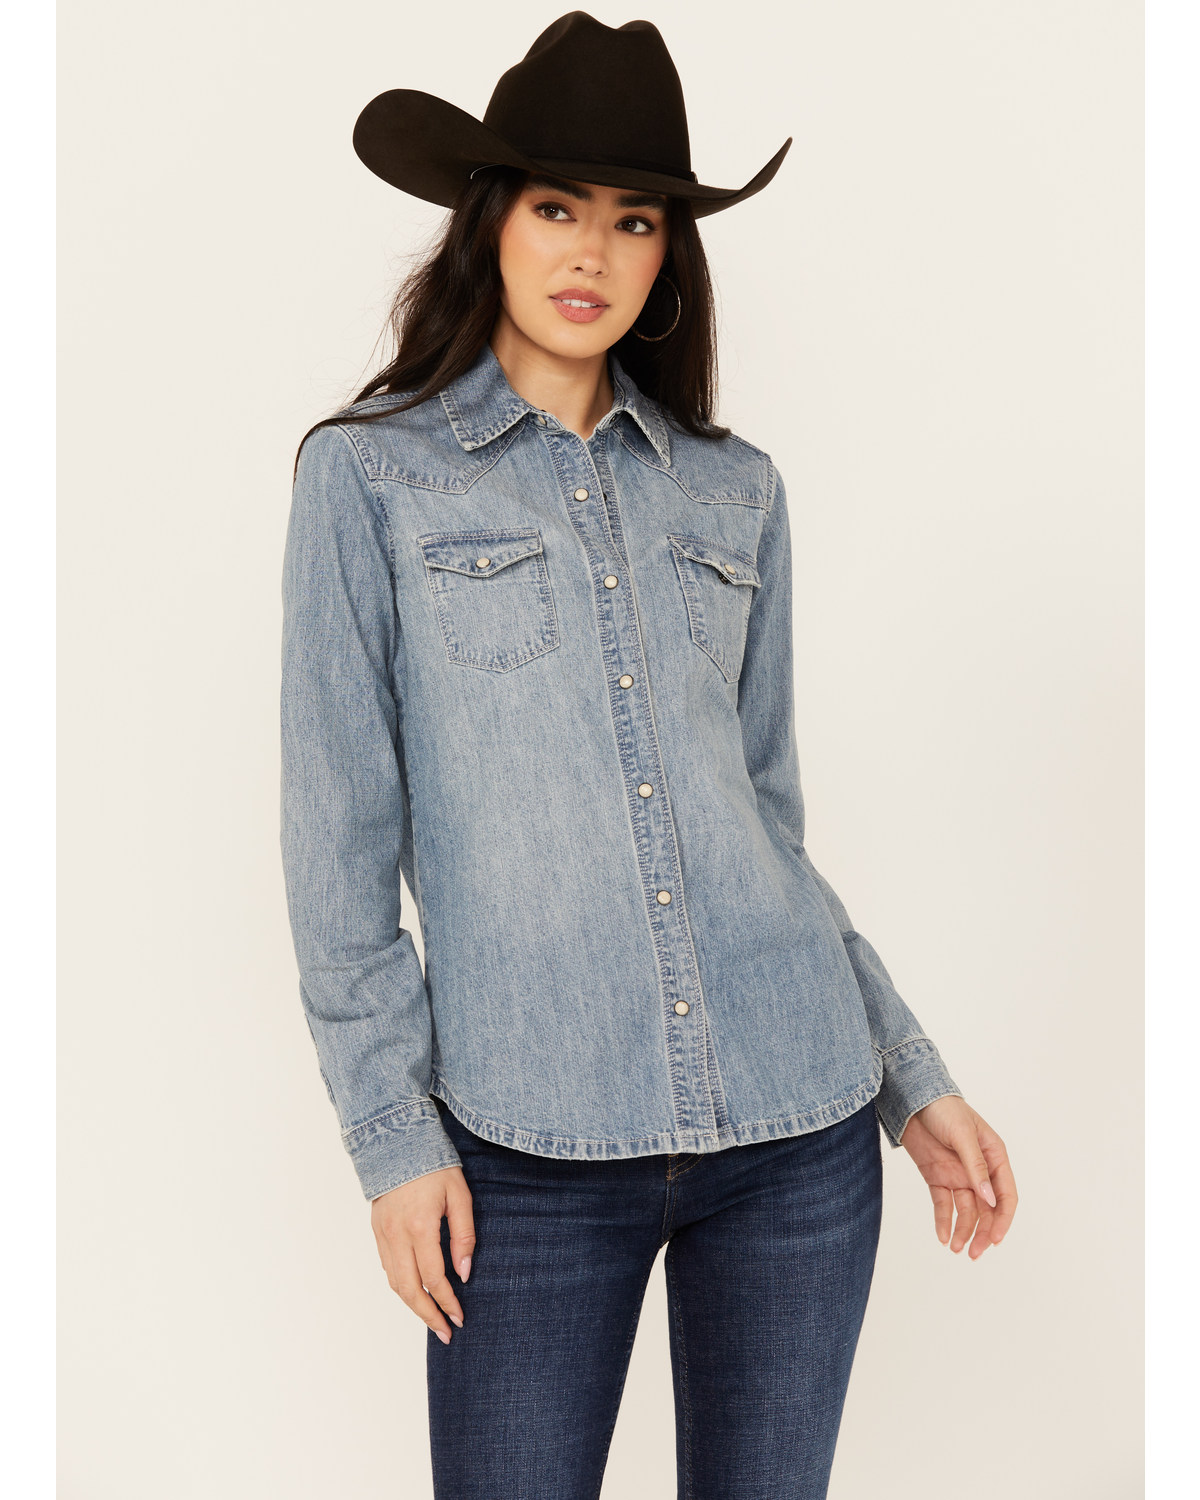 Stetson Women's Medium Wash Embroidered Cowboy Long Sleeve Pearl Snap Denim Shirt